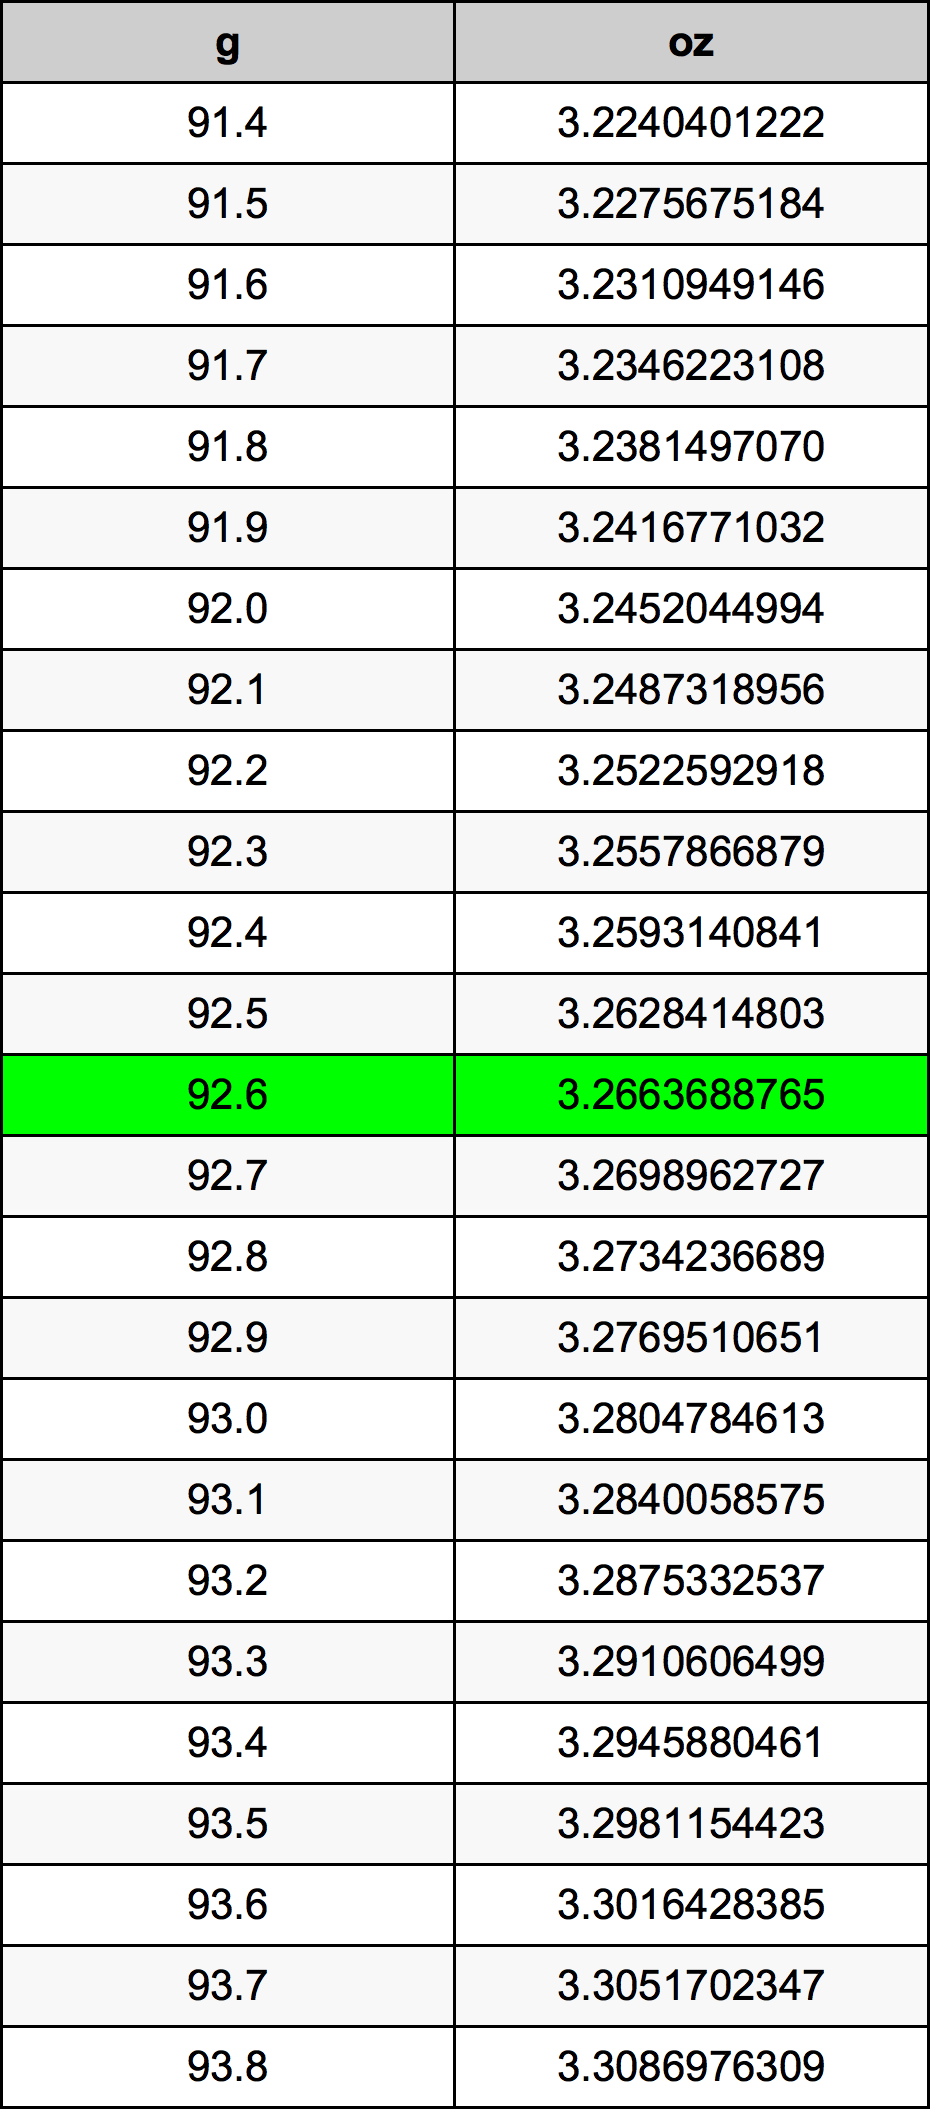 92.6 غرام جدول تحويل